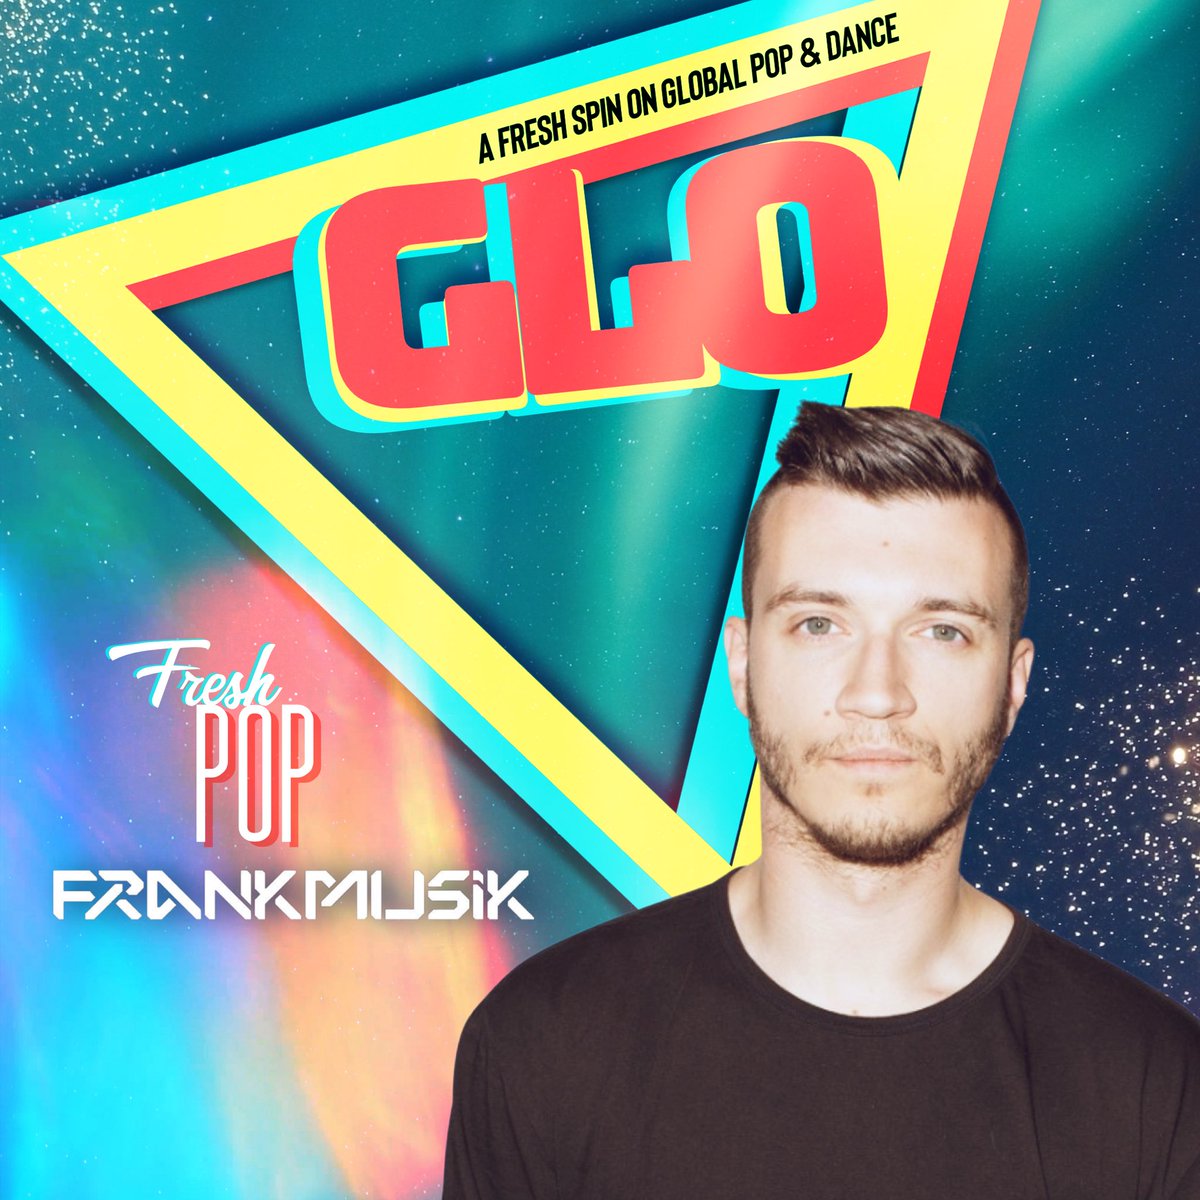 FRANKMUSIK with Fresh Pop on an all new GLO 🪩 Listen now: MixCloud.com/GLOradio
.
.
.
#frankmusik #popmusic #newmusic #freshmusic #singersongwriter #podcast #musicshow #mixcloud #indiedance #glo #dancemusic #indiepop #electropop #dancepop #england